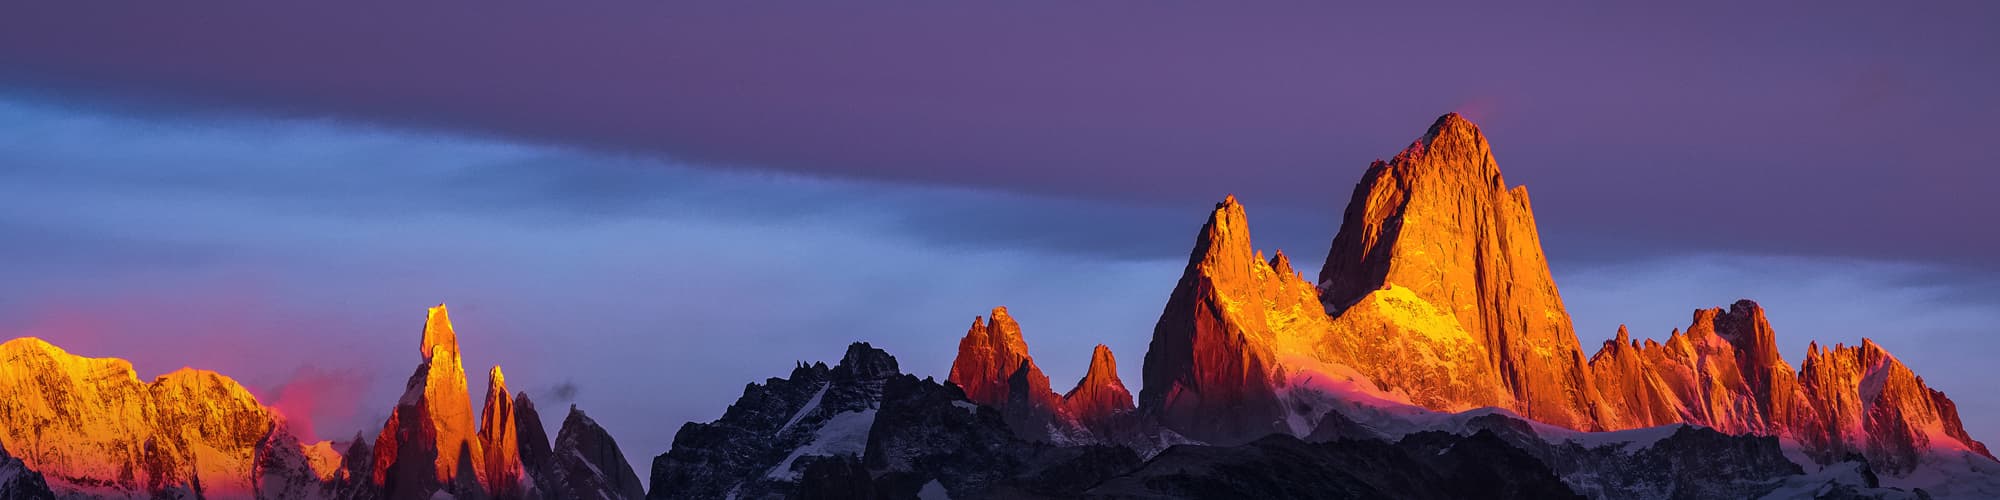 Voyage en groupe Patagonie argentine © Mweber67 / Adobe Stock